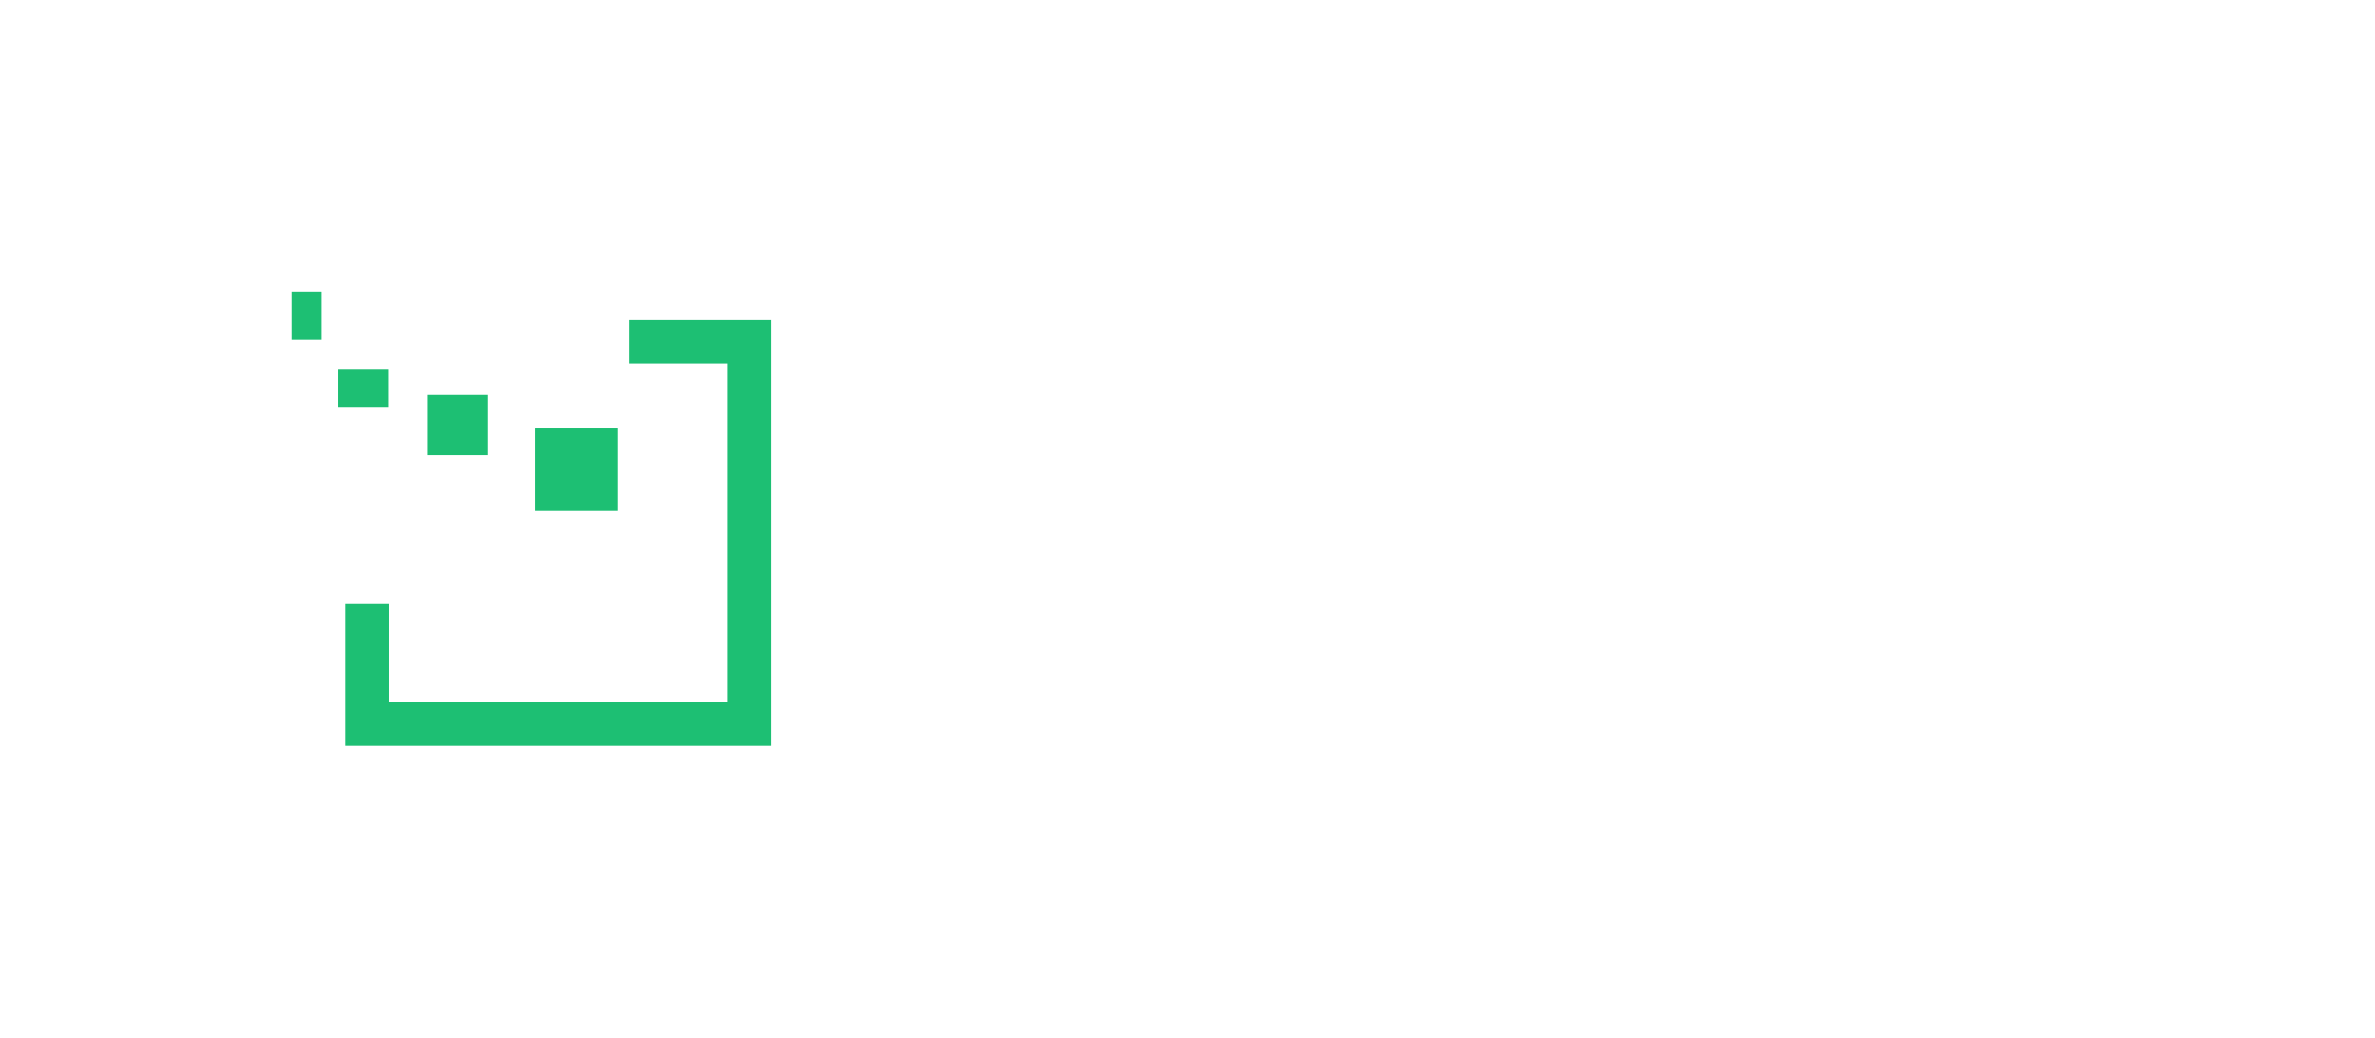 Pixel Master Technologies